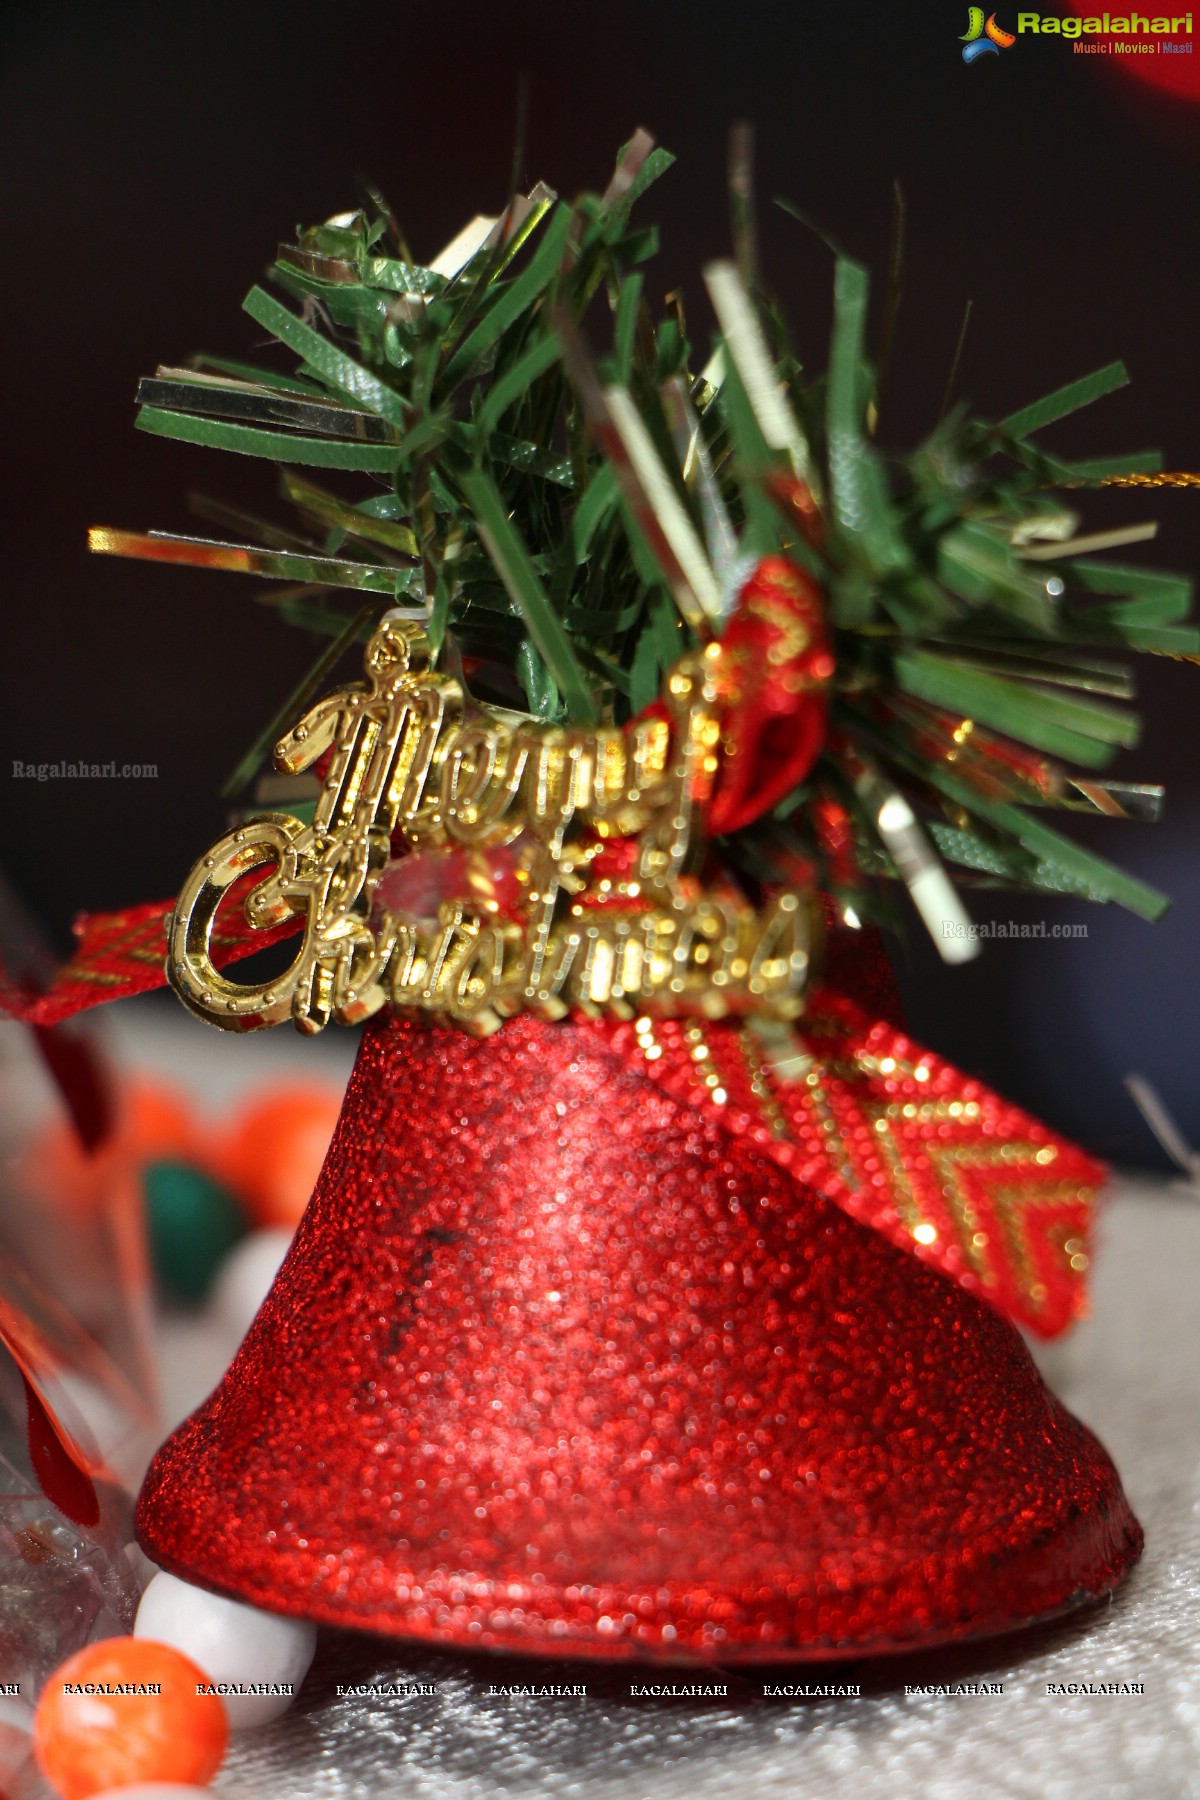 Christmas and New Year’s Celebrations at Golkonda Hotel